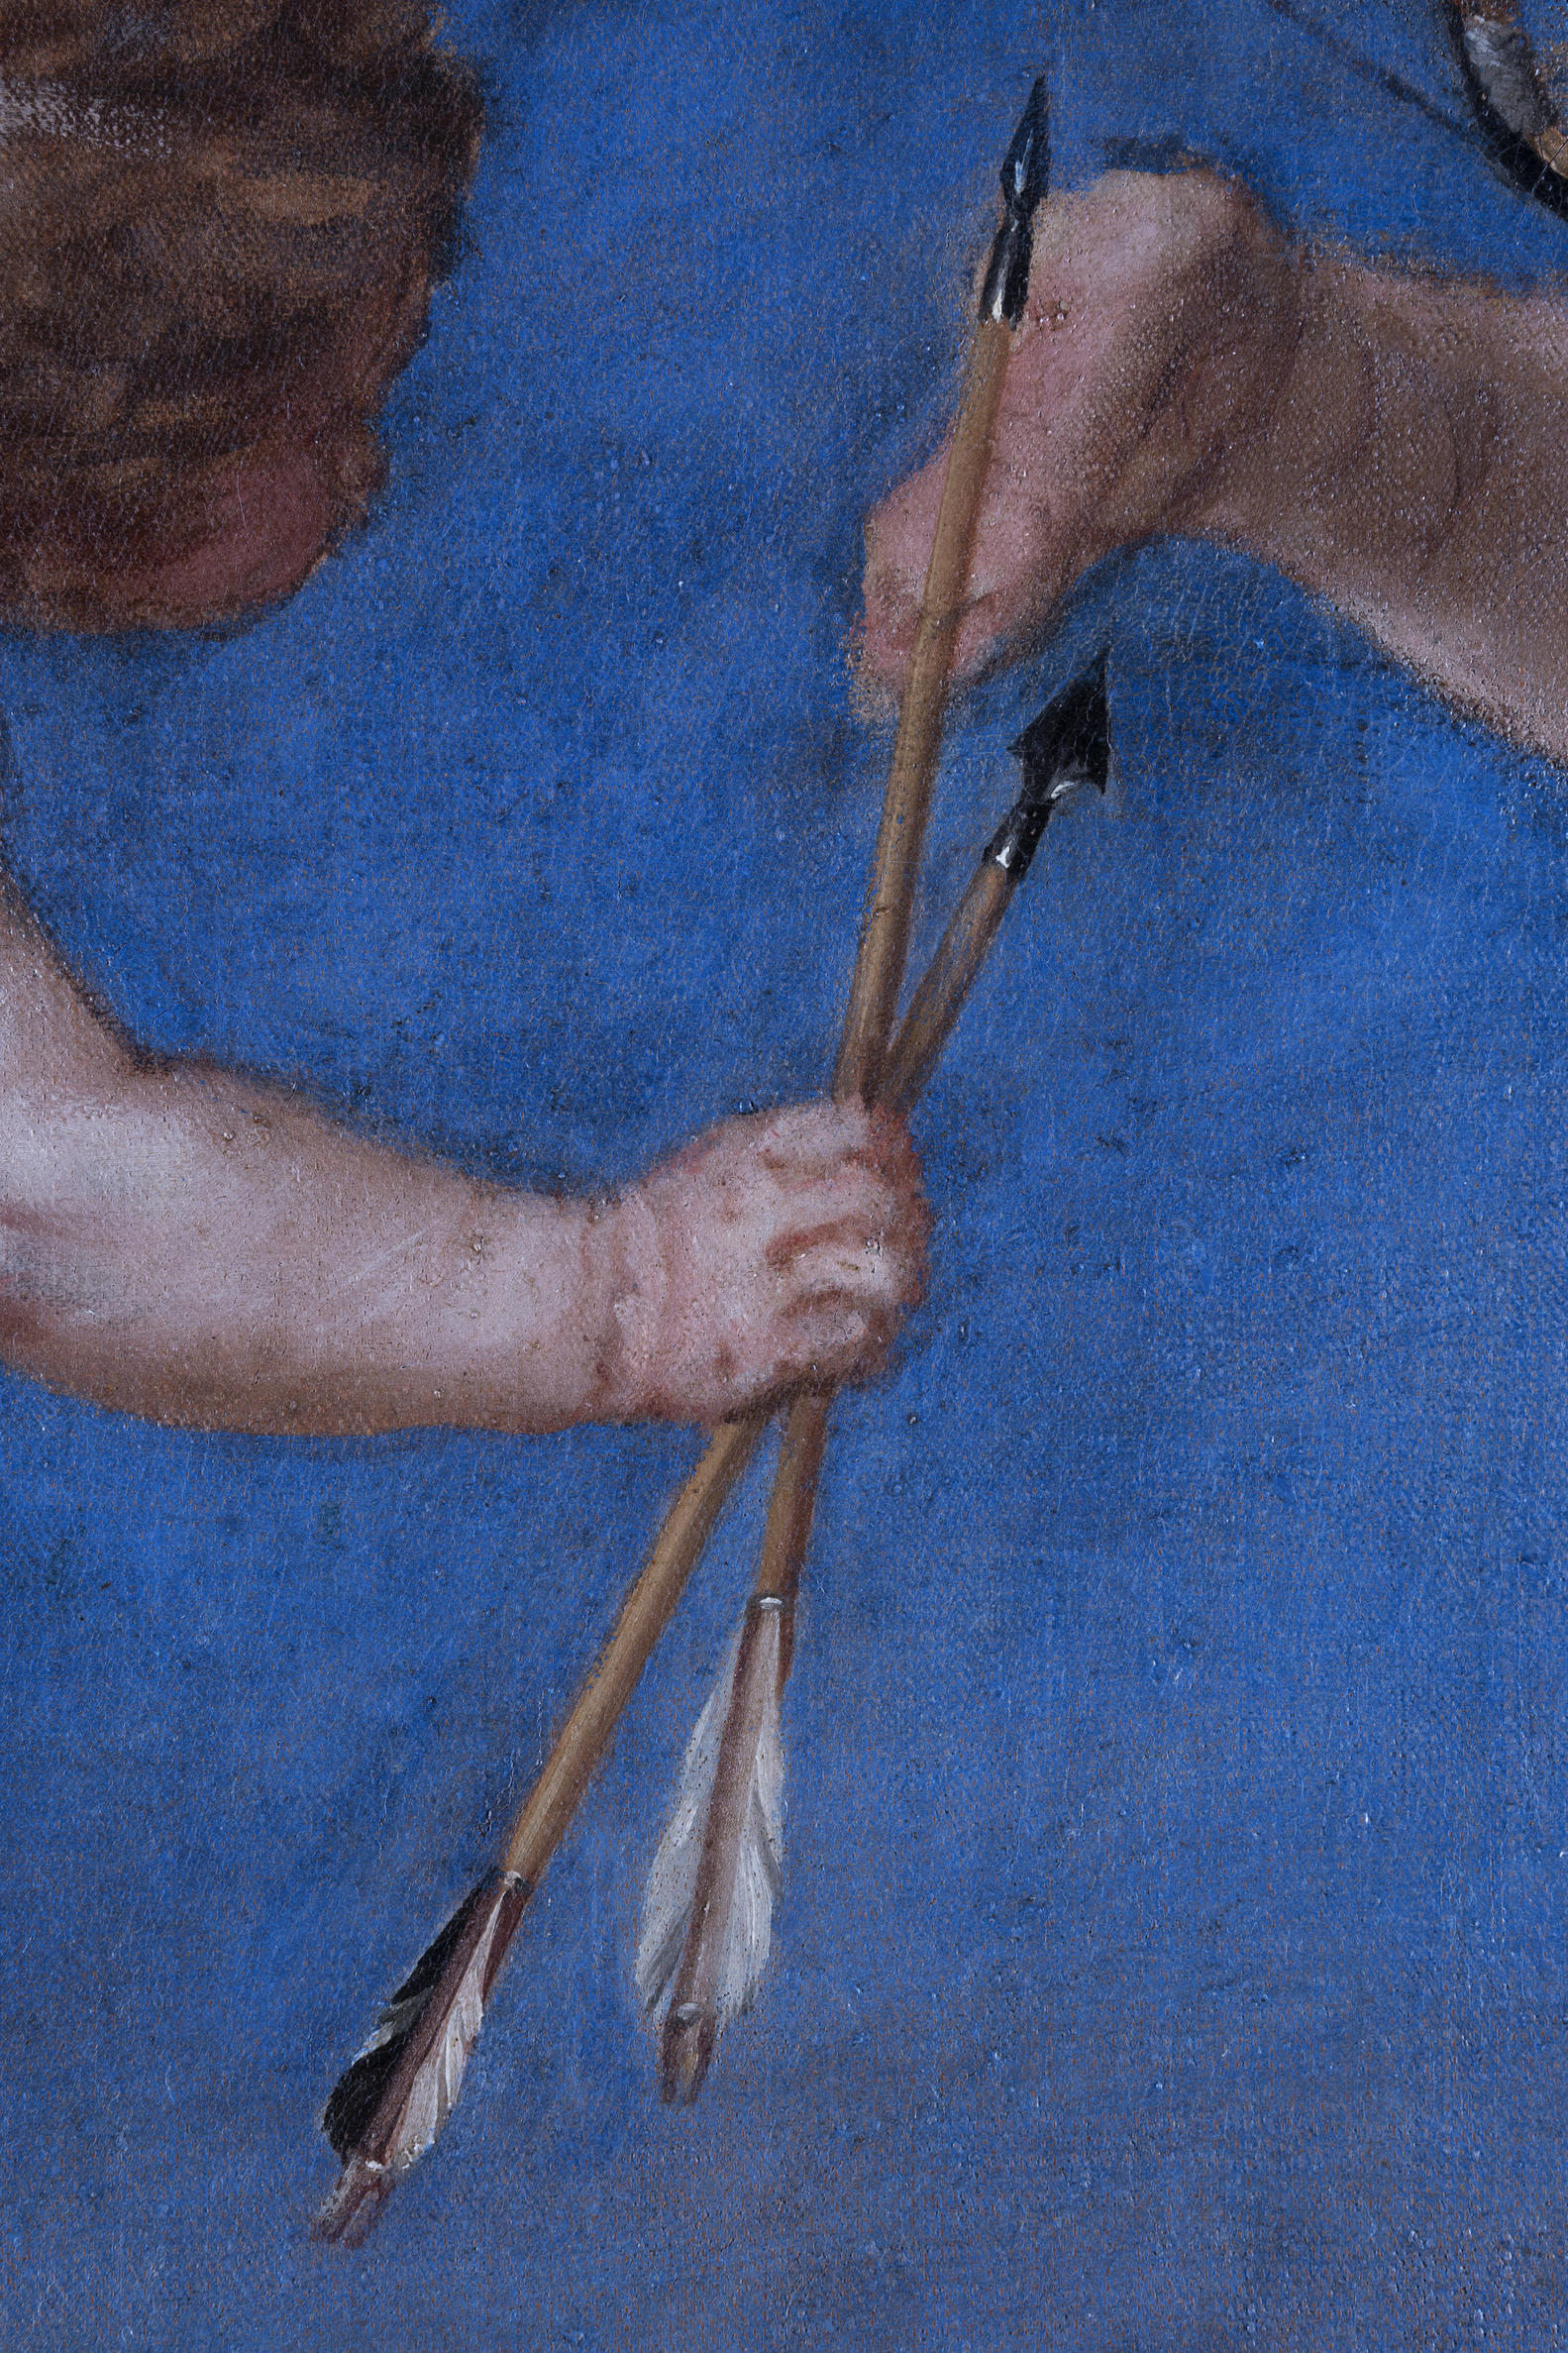 A close up of a hand holding an arrow. 